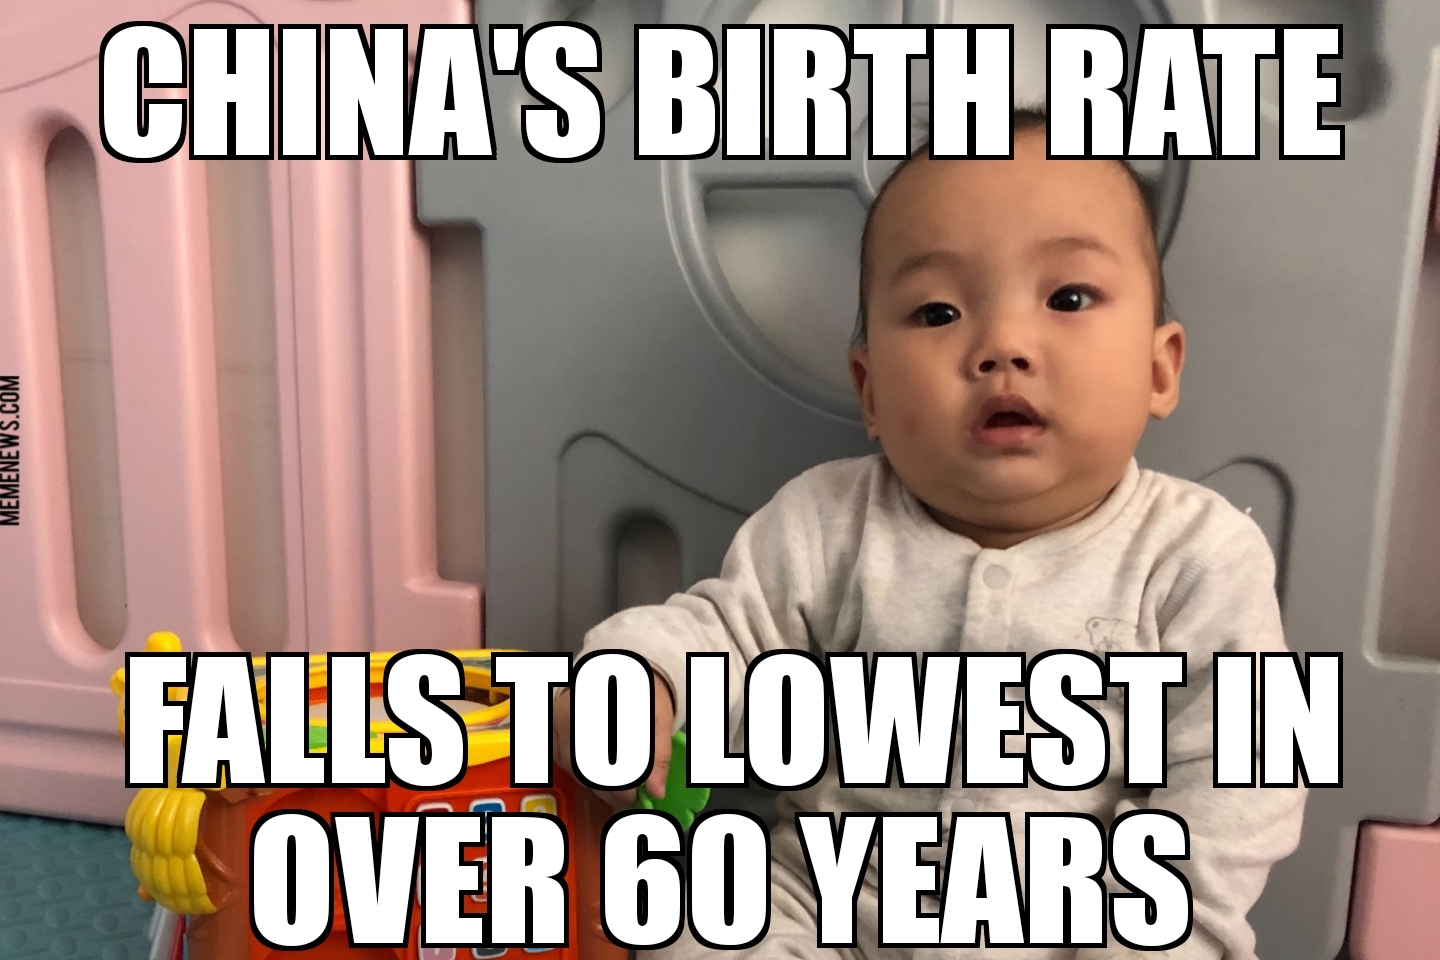 China births fall